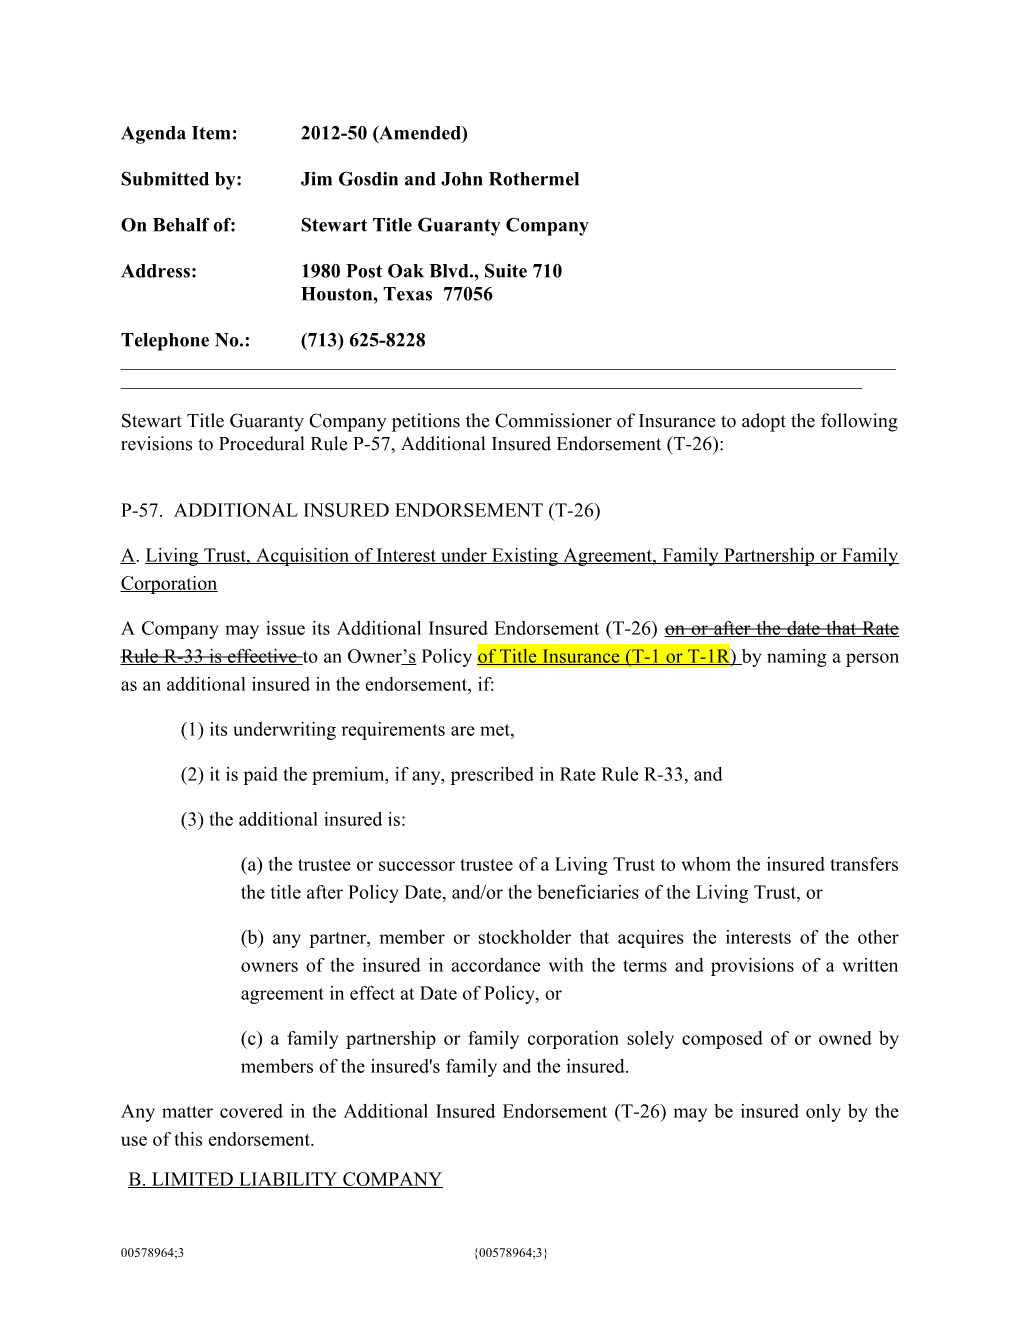 STGC Agenda Item 2012-50 Amendment to P-57 (Amended) (00578964-3)